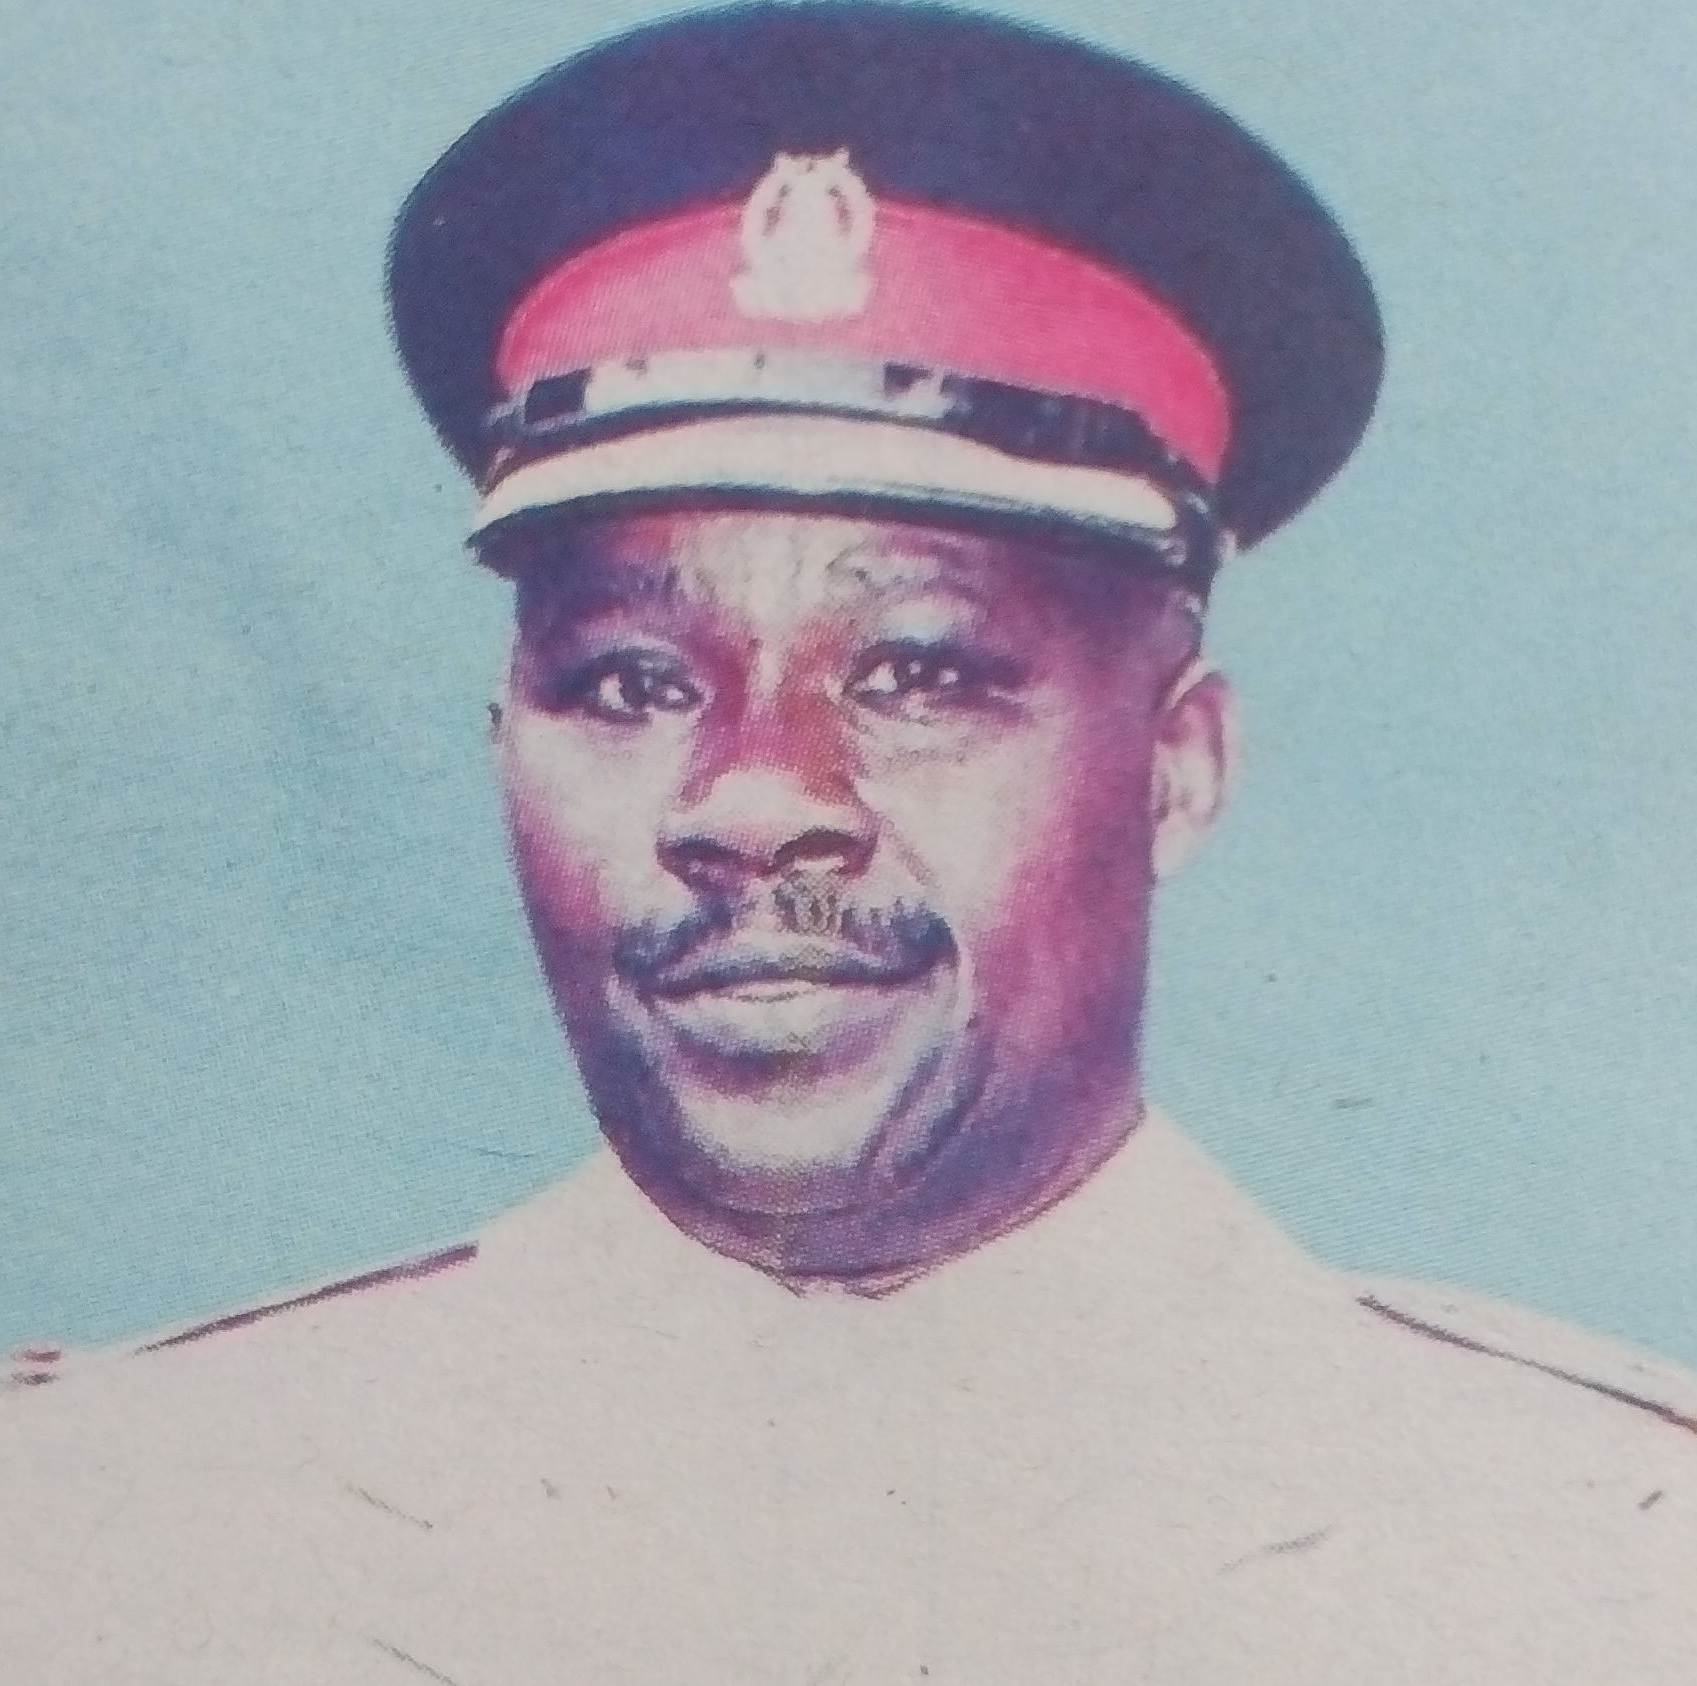 Obituary Image of Lt Col (Rtd) John Samson Oyunge